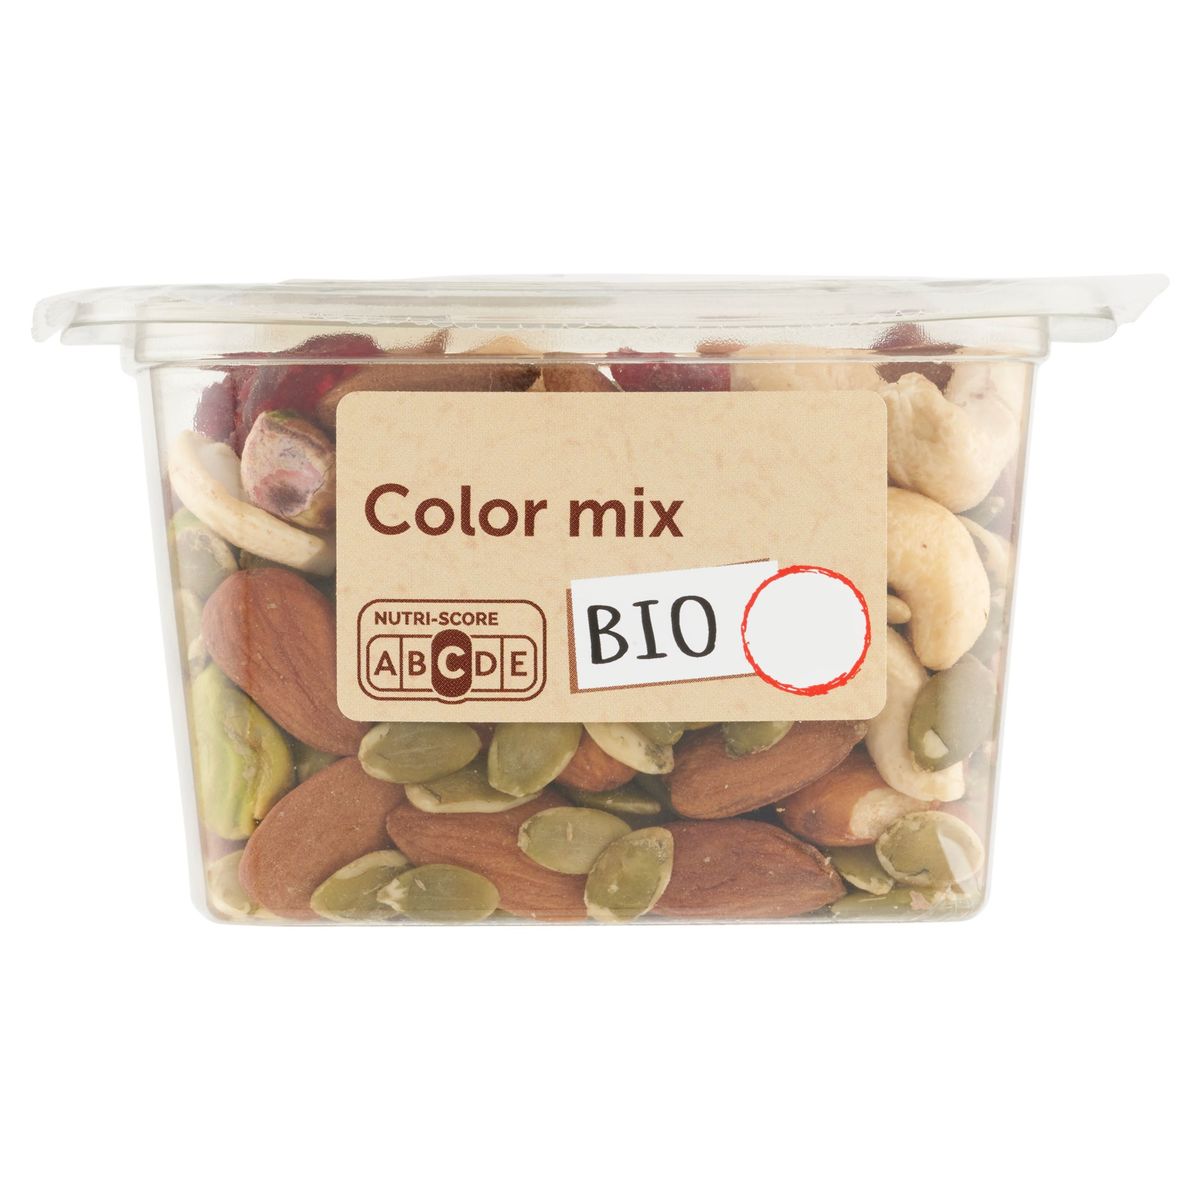 Carrefour Bio Nuts & Fruits Bio Sport Mix 175 g